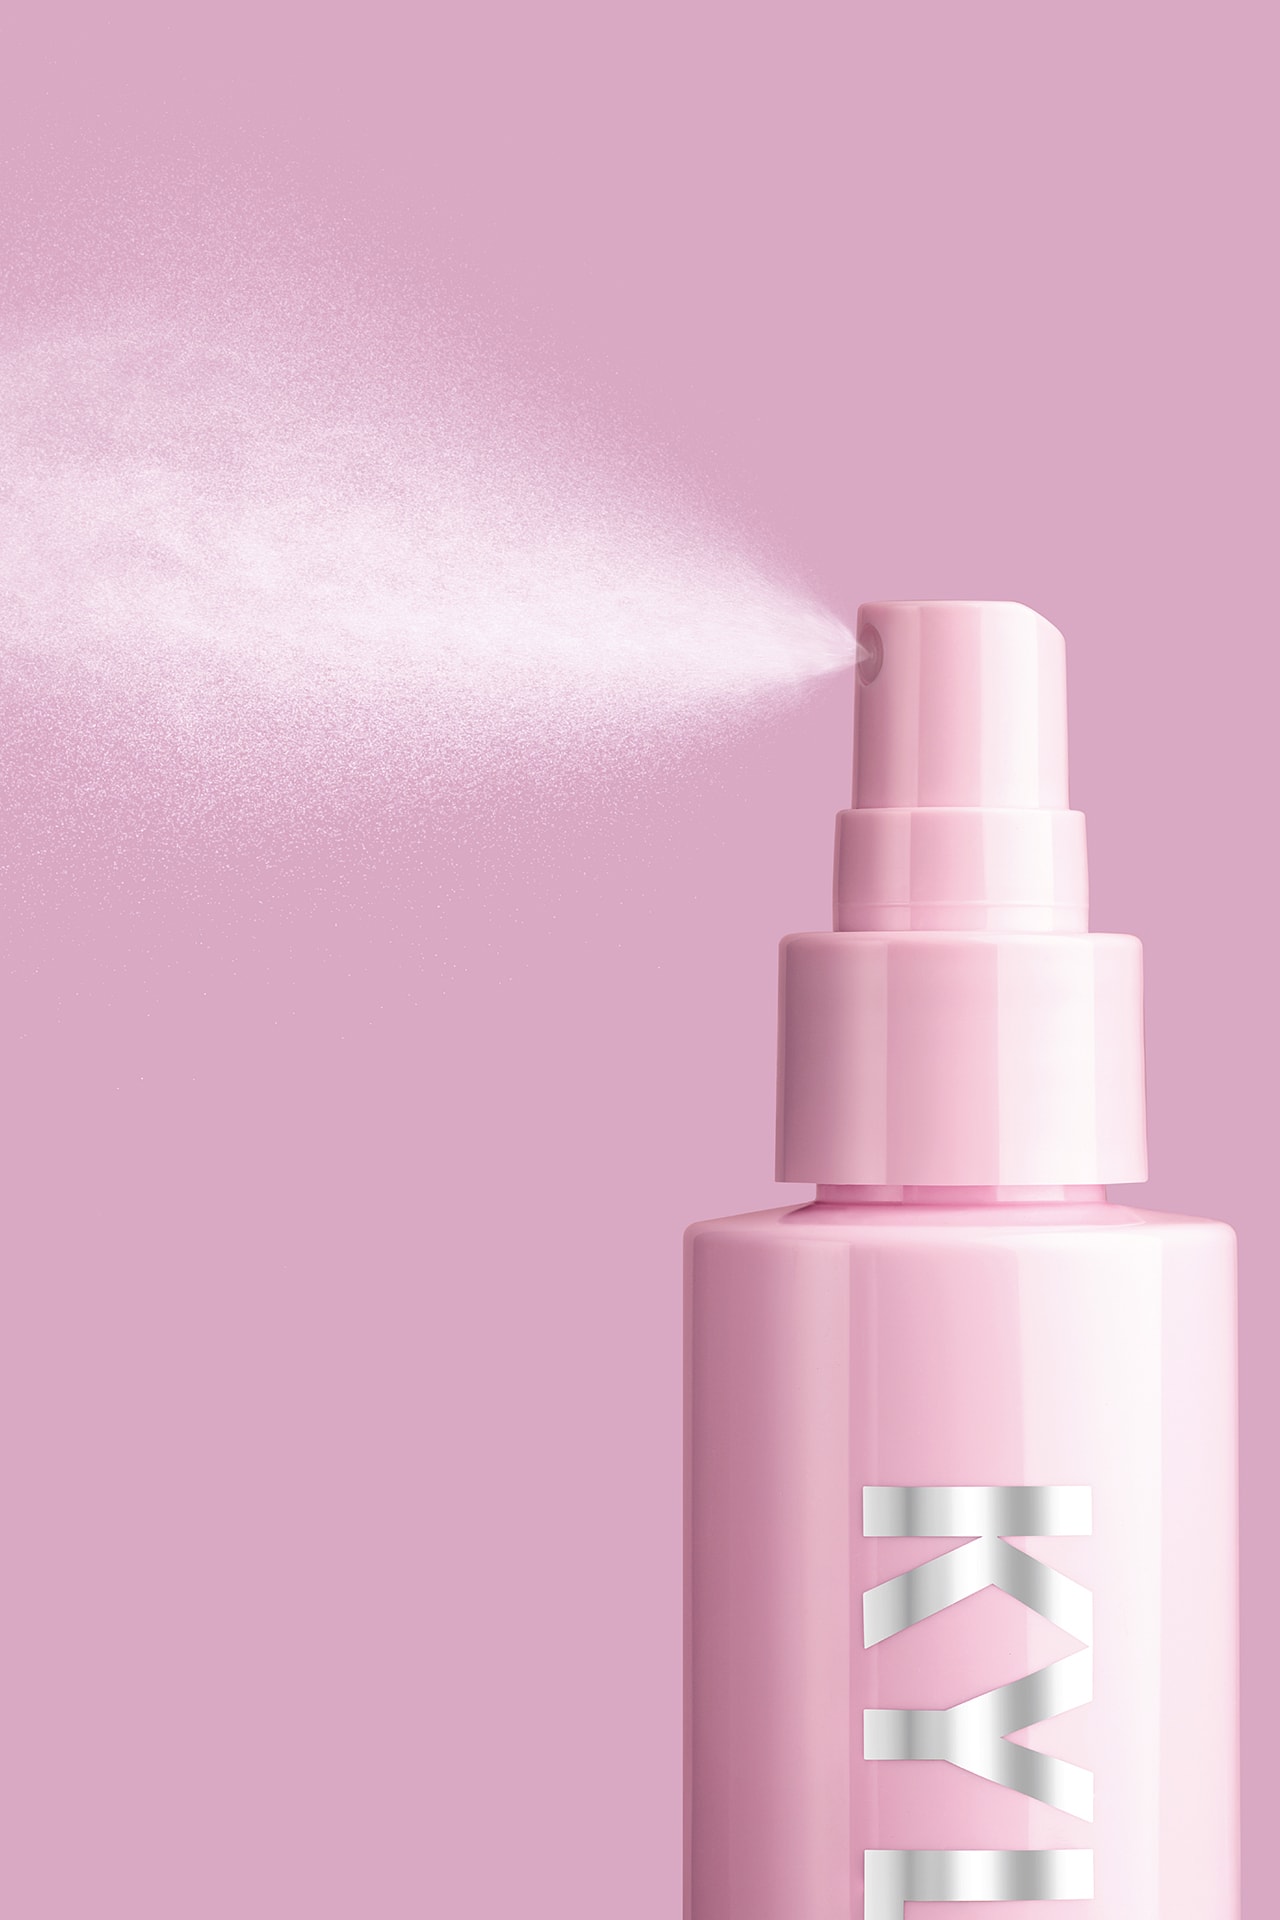 kylie jenner cosmetics mattifying setting spray pink bottle silver packaging makeup beauty